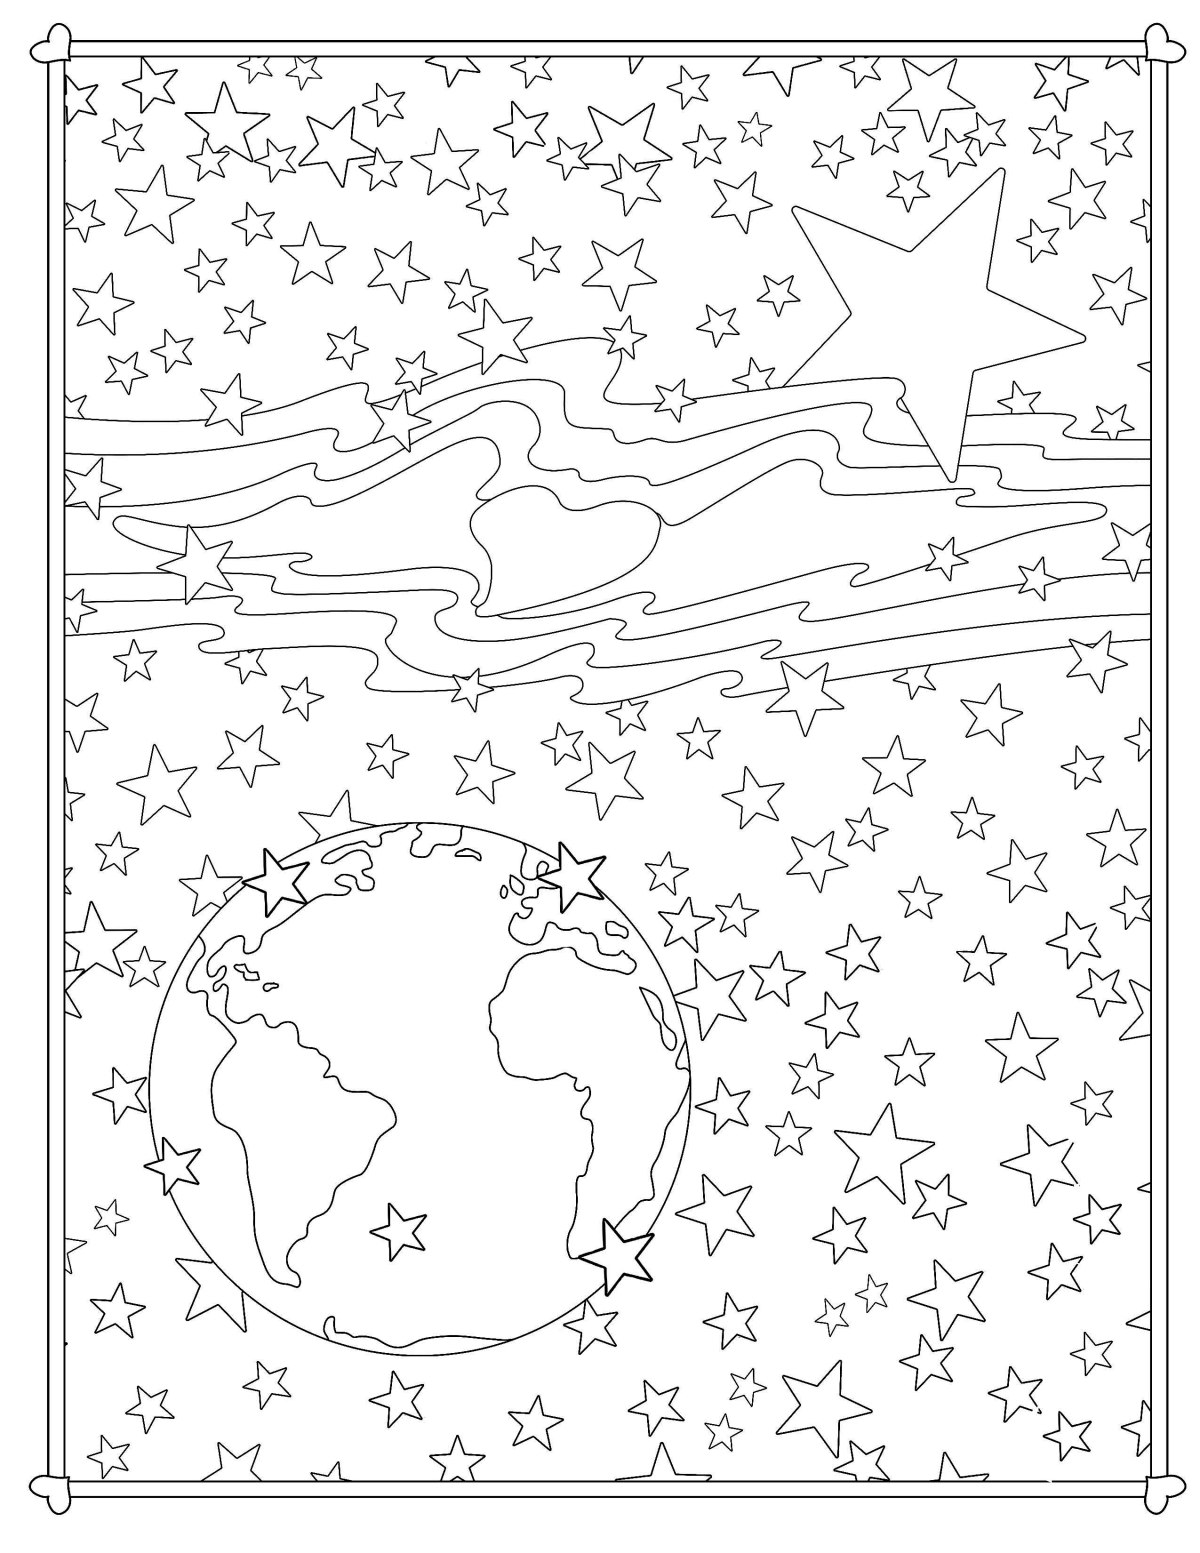 Starfield-withearth-coloringpage